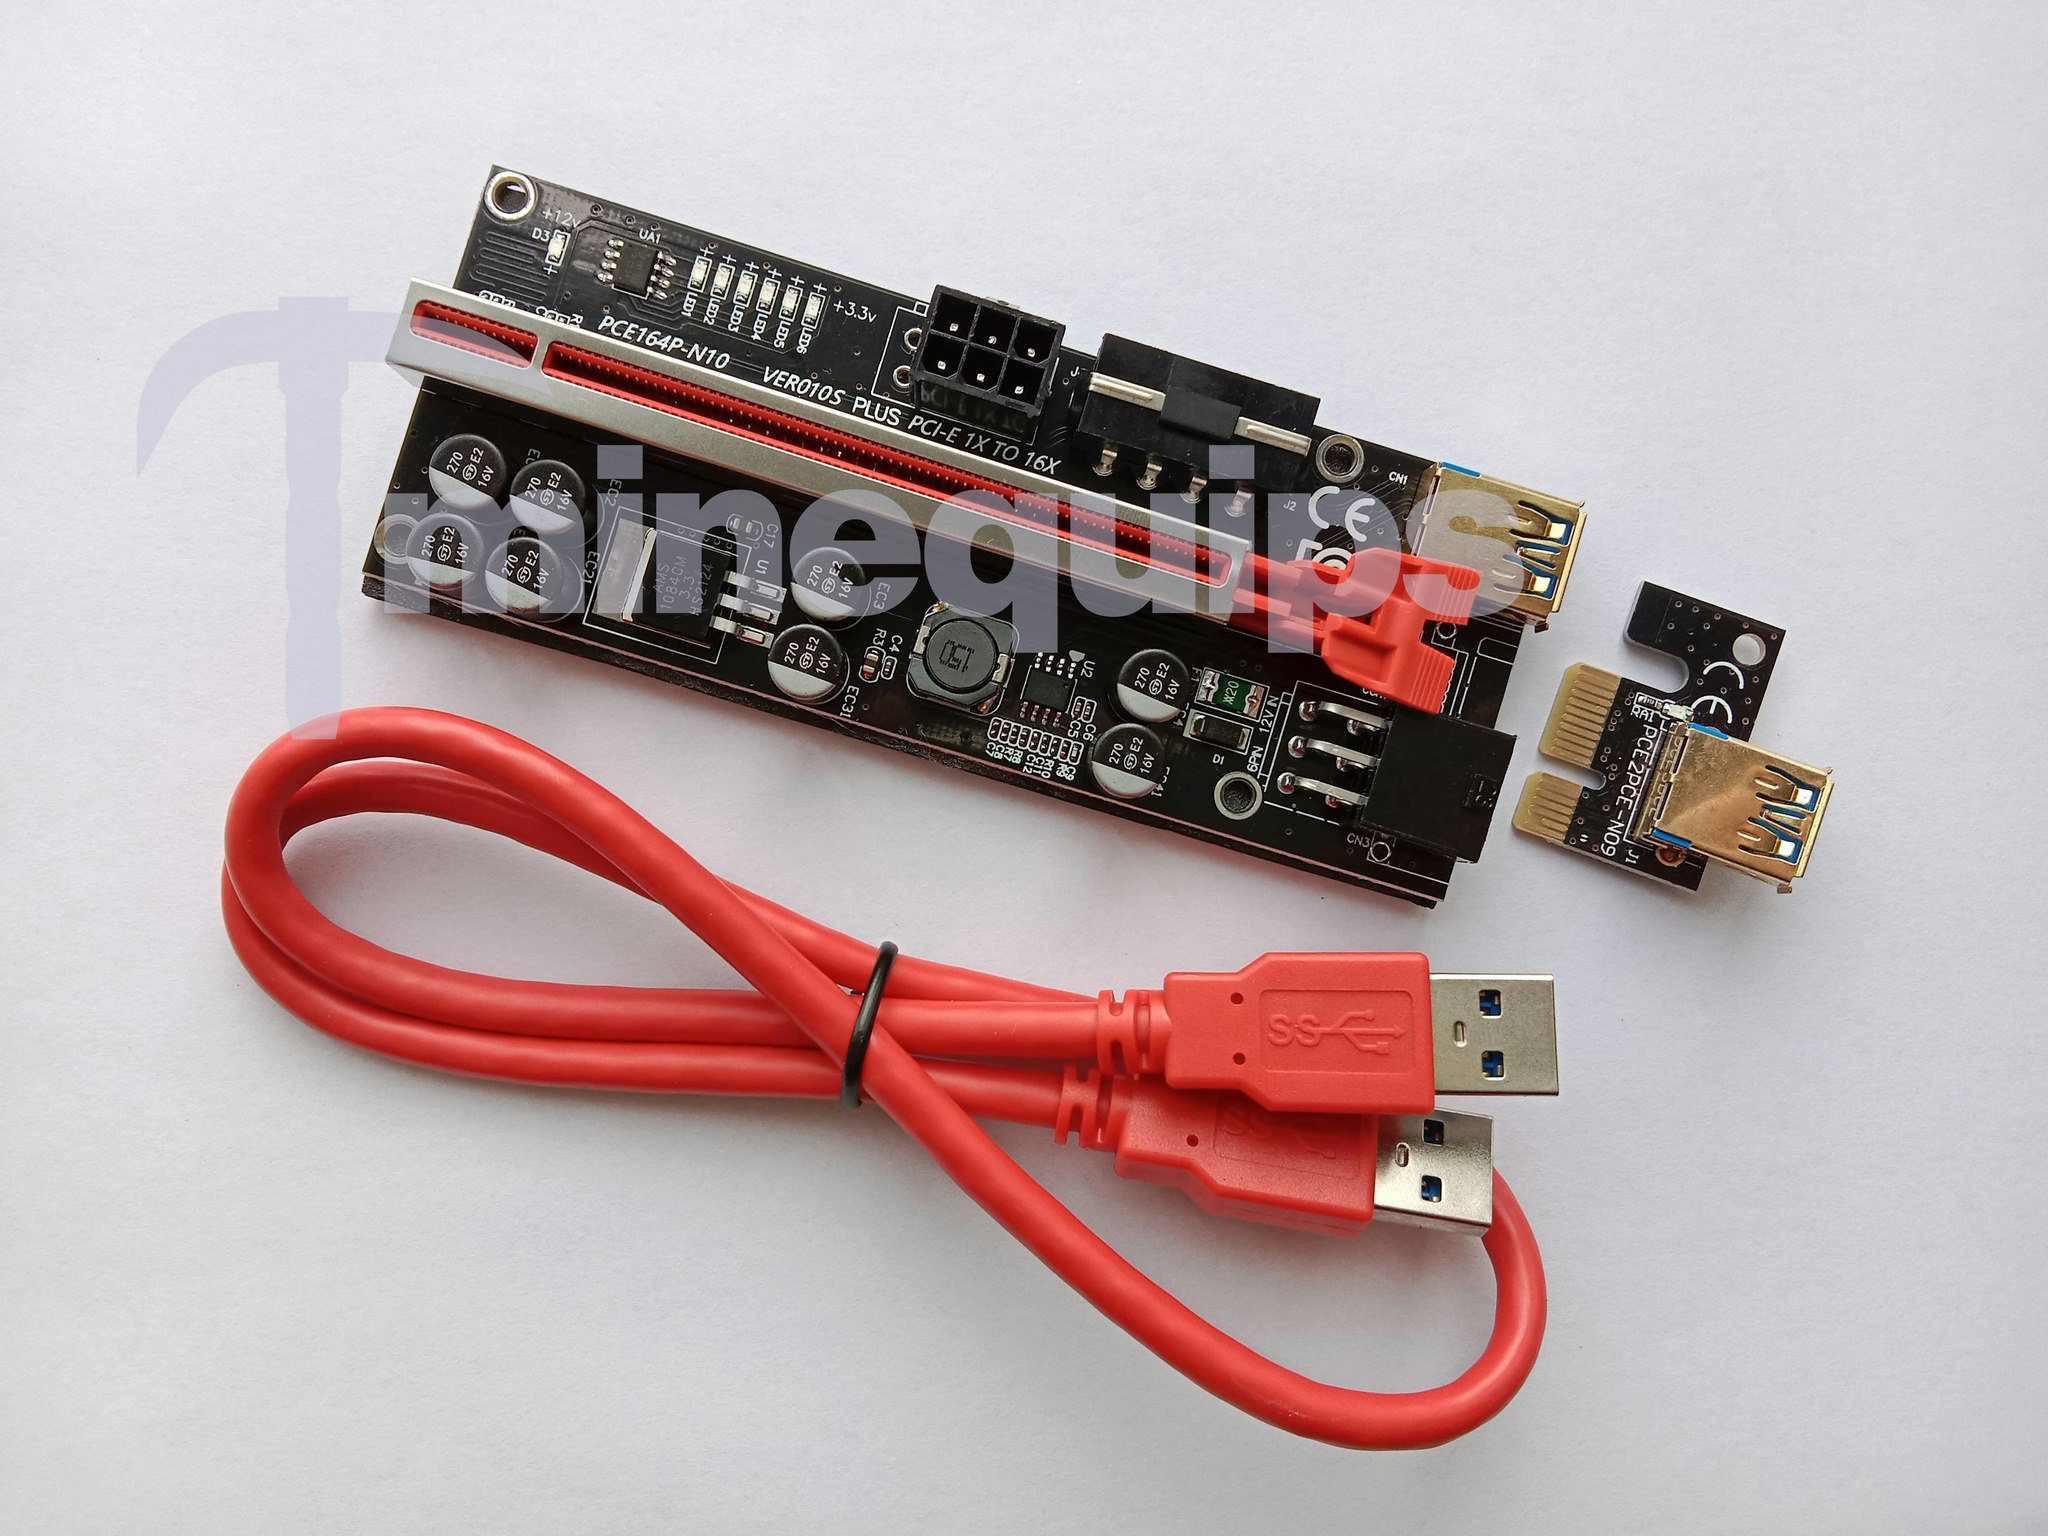 Minequips Riser 010S PLUS – CE, RoHS, 8 kondensatorer, sköldad PCIE, guldpläterad